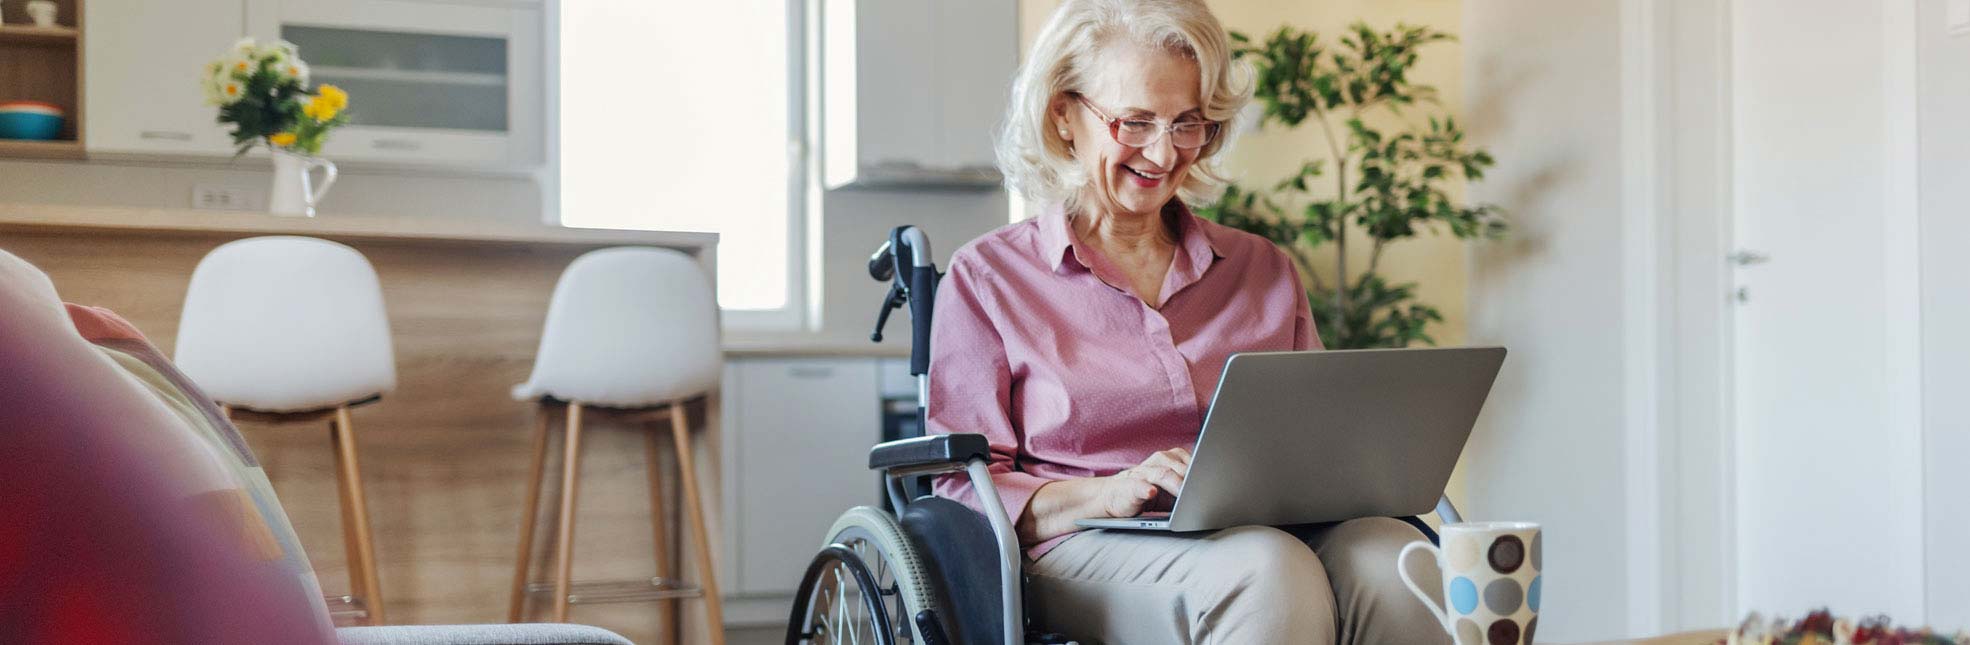 Senior woman in a wheelchair viewing a laptop